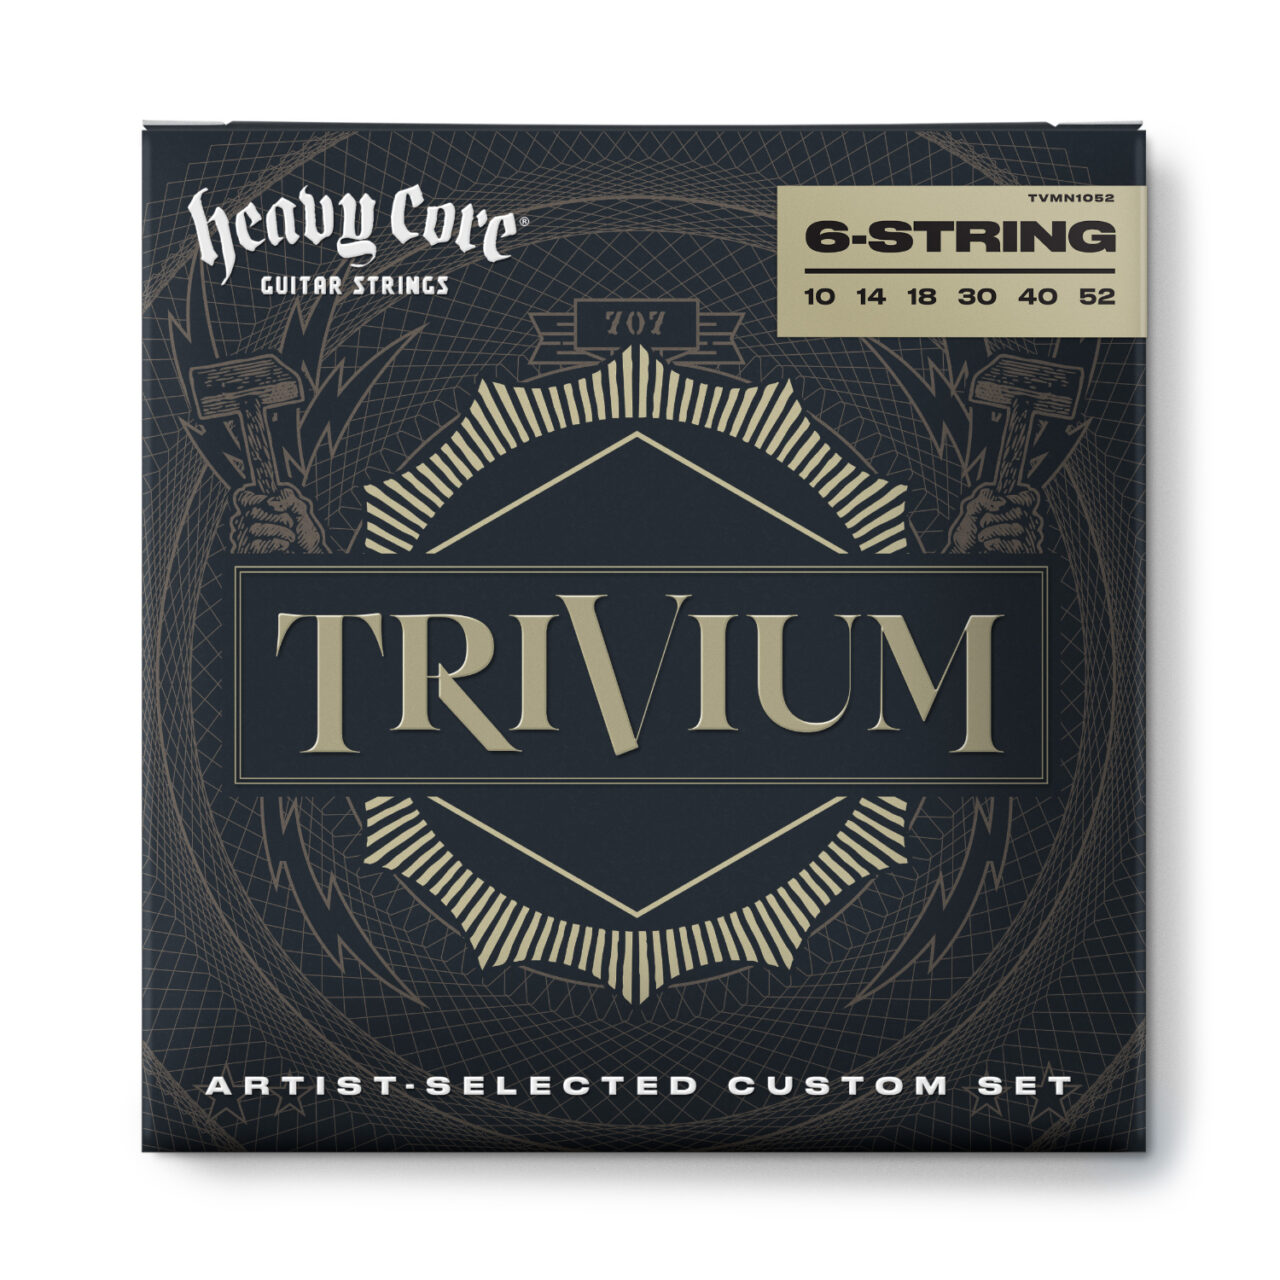 JIM DUNLOP TVMN1052 TRIVIUM HEAVY CORE STRINGS 10/52 エレキギター弦